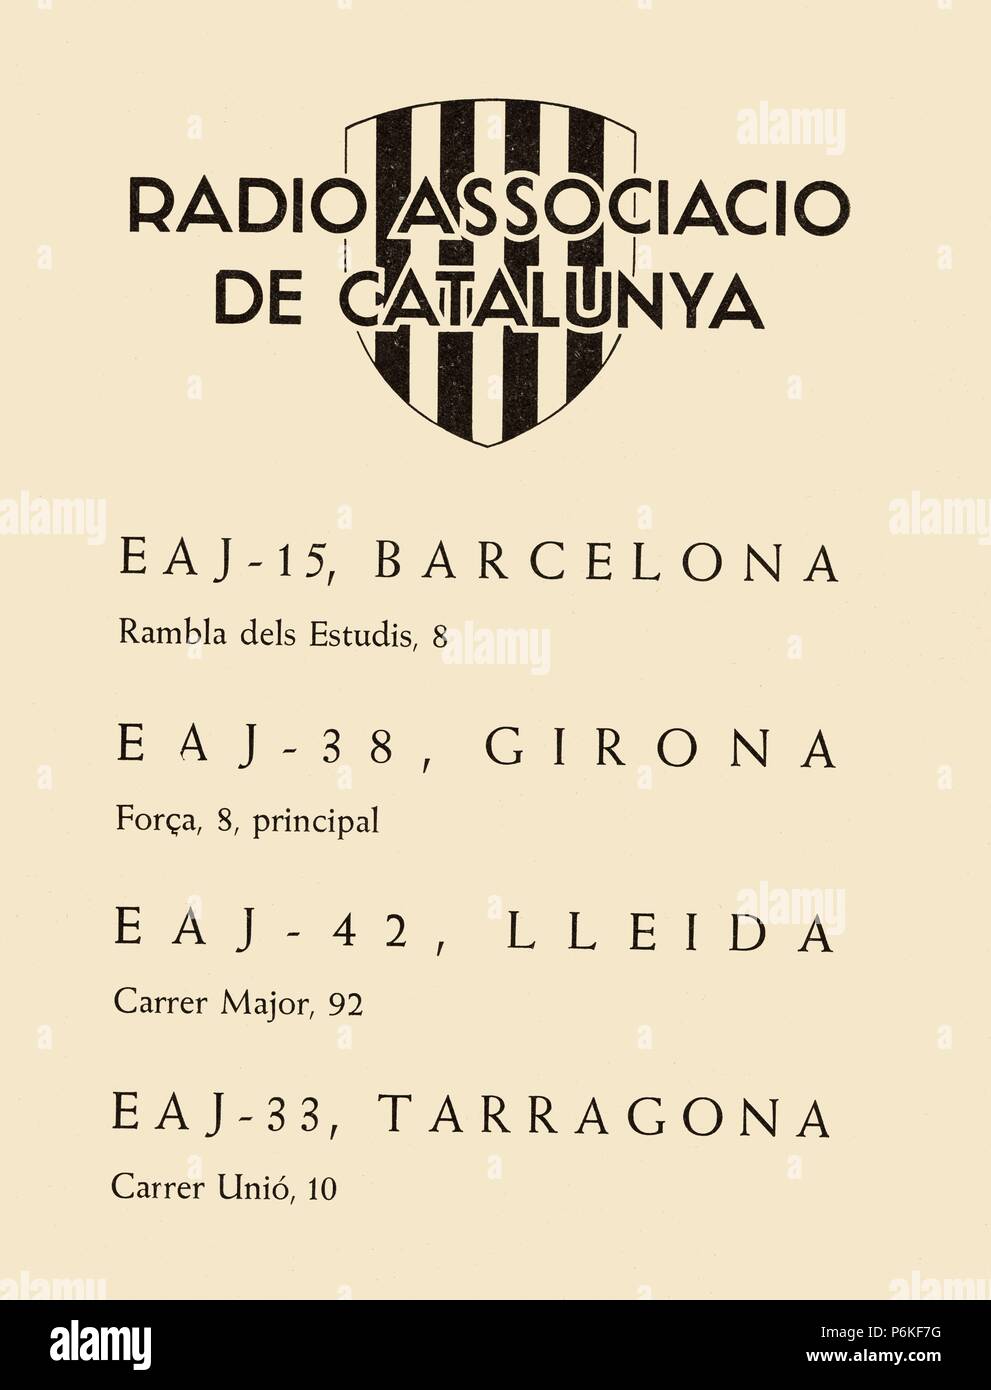 Grupo de emisoras que forman Radio Associació de Catalunya. Año 1934  Fotografía de stock - Alamy